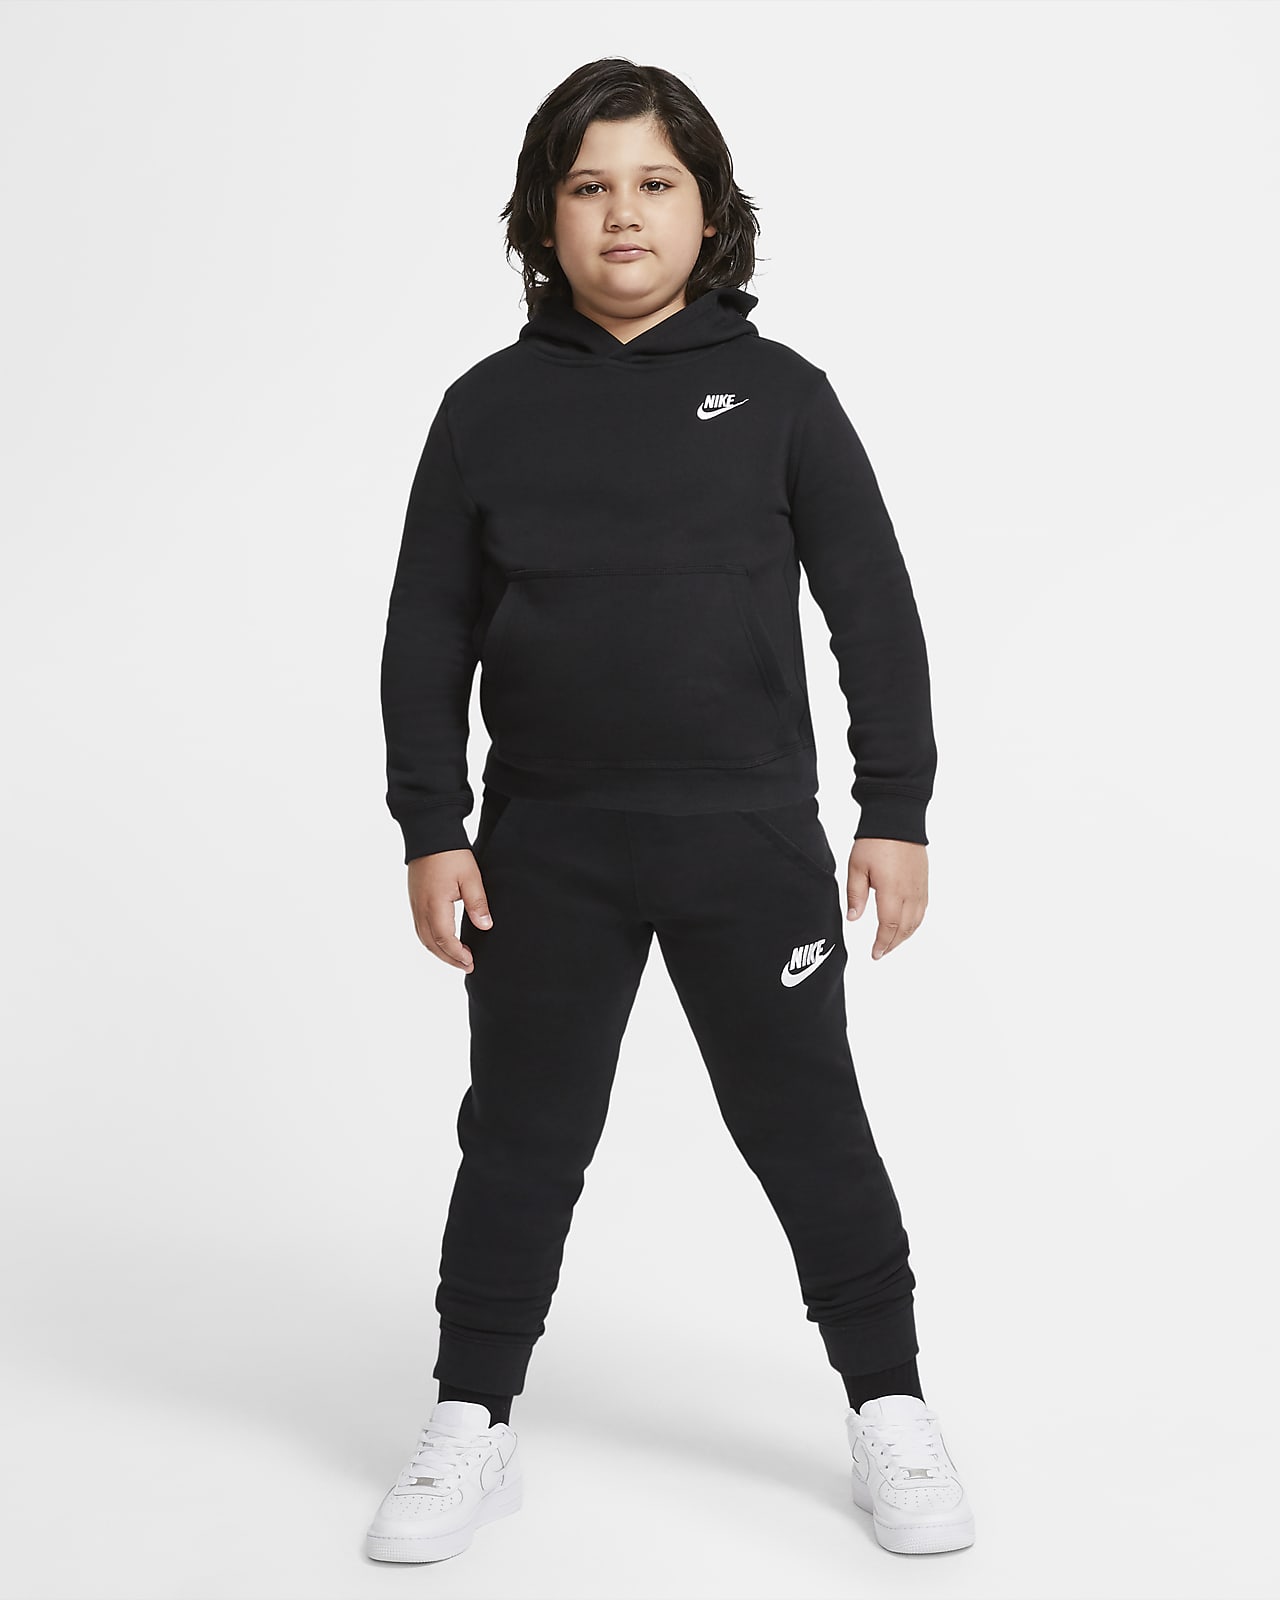 Ensemble Nike enfant garçon